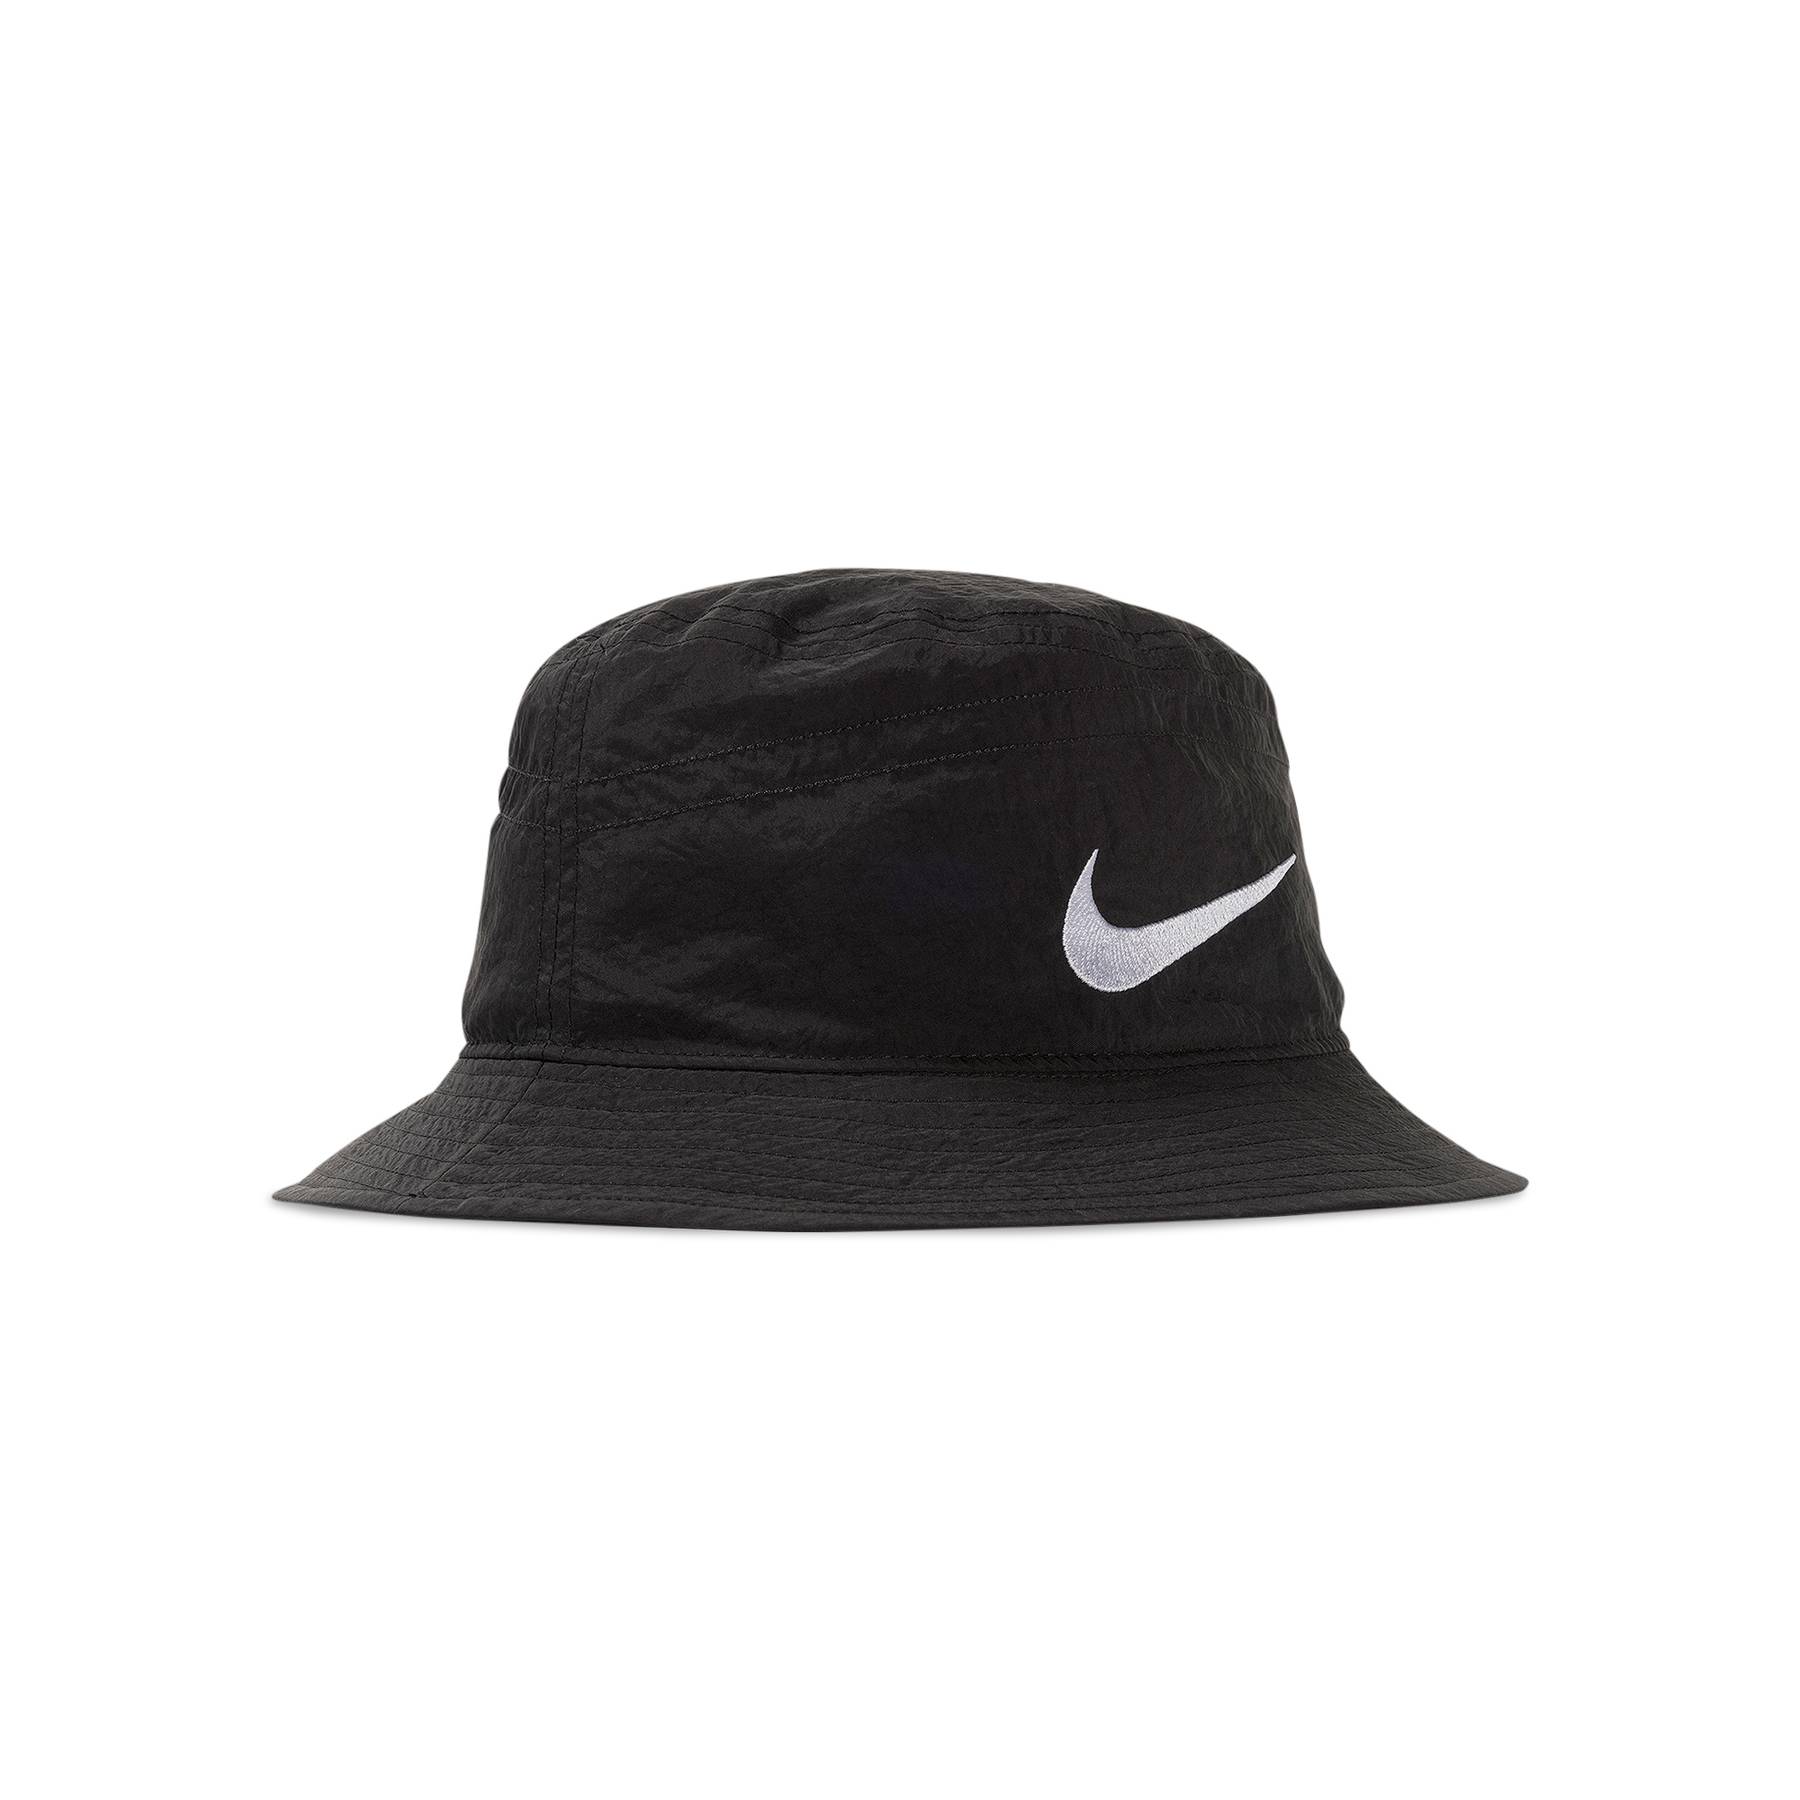 Nike x Stussy Bucket Hat 'Black' - Nike - CT8411 010 | GOAT